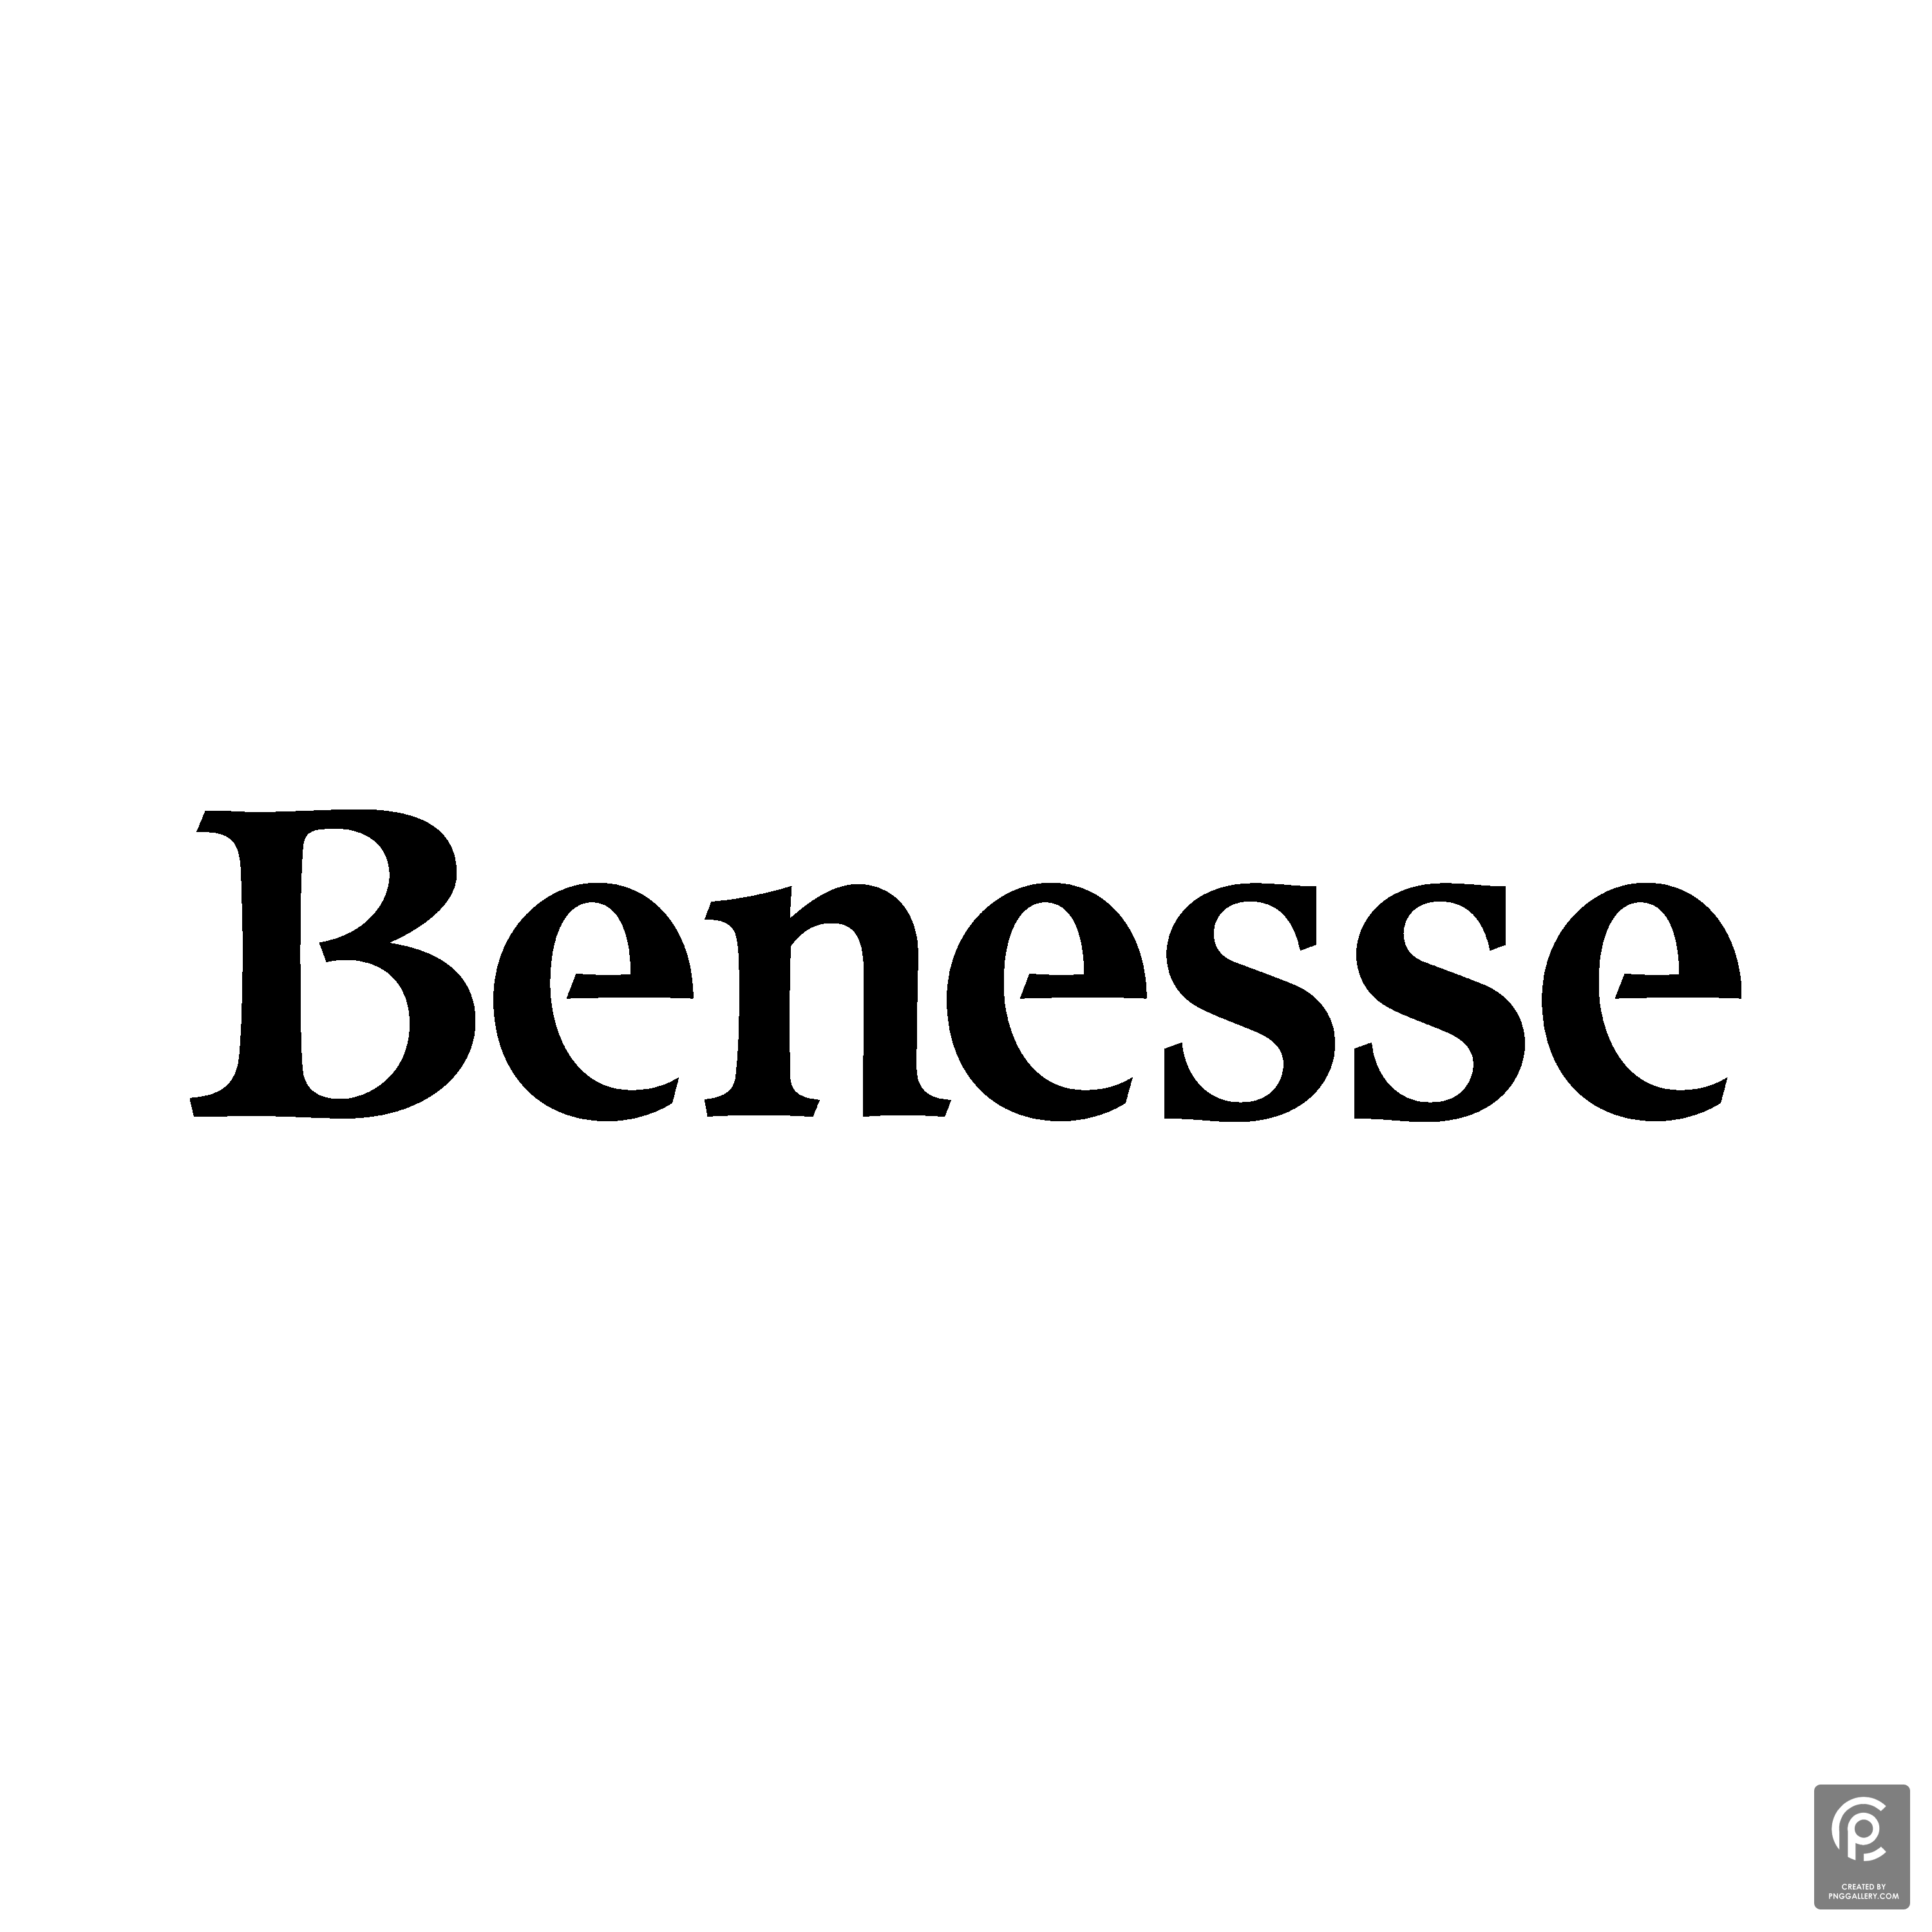 Benesse Logo Transparent Gallery